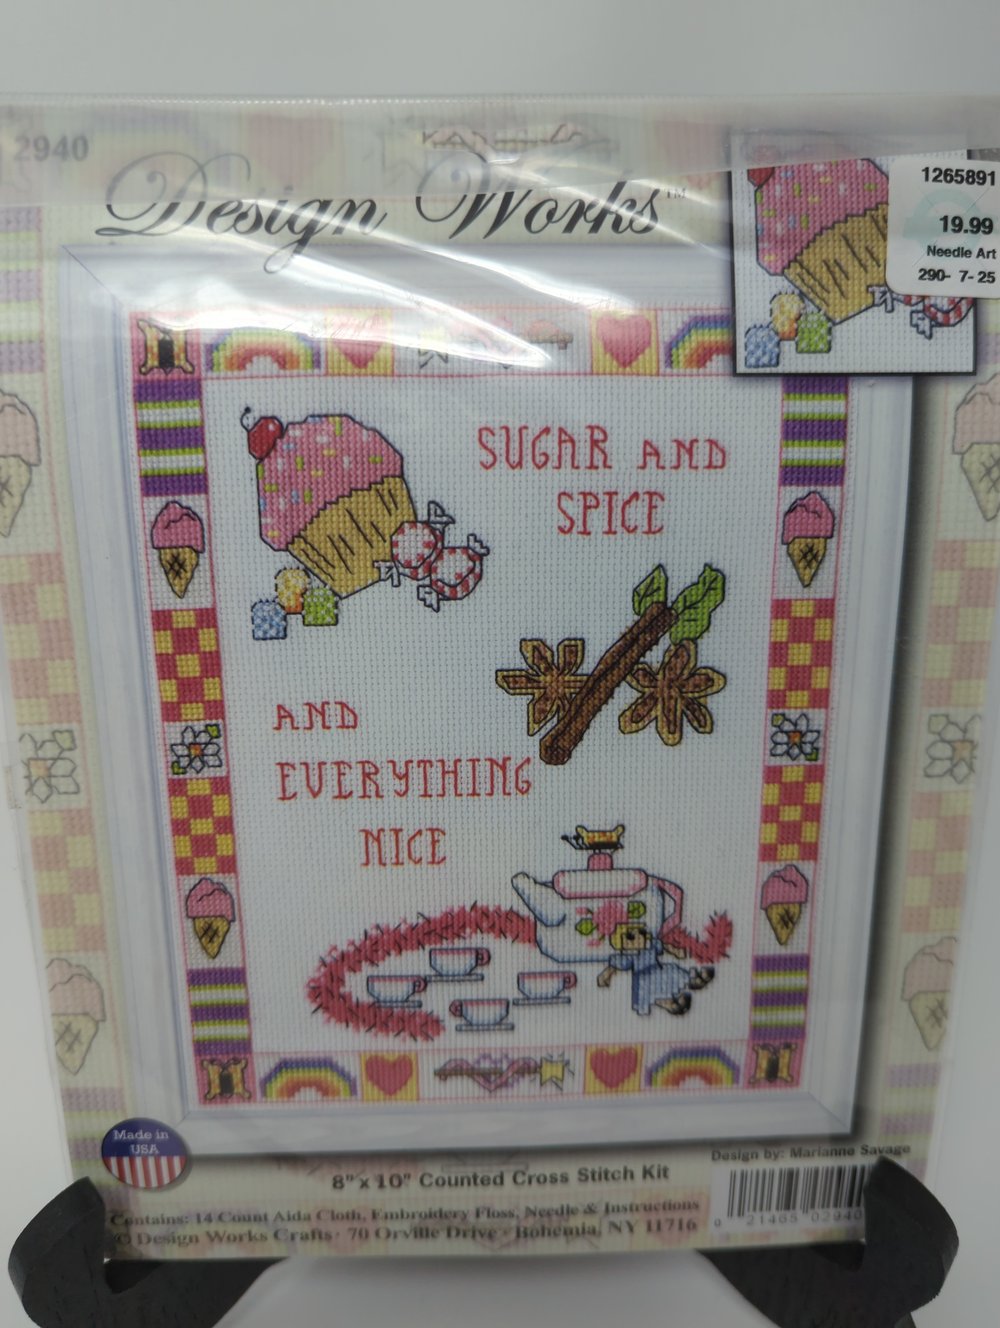 Everything Cross Stitch